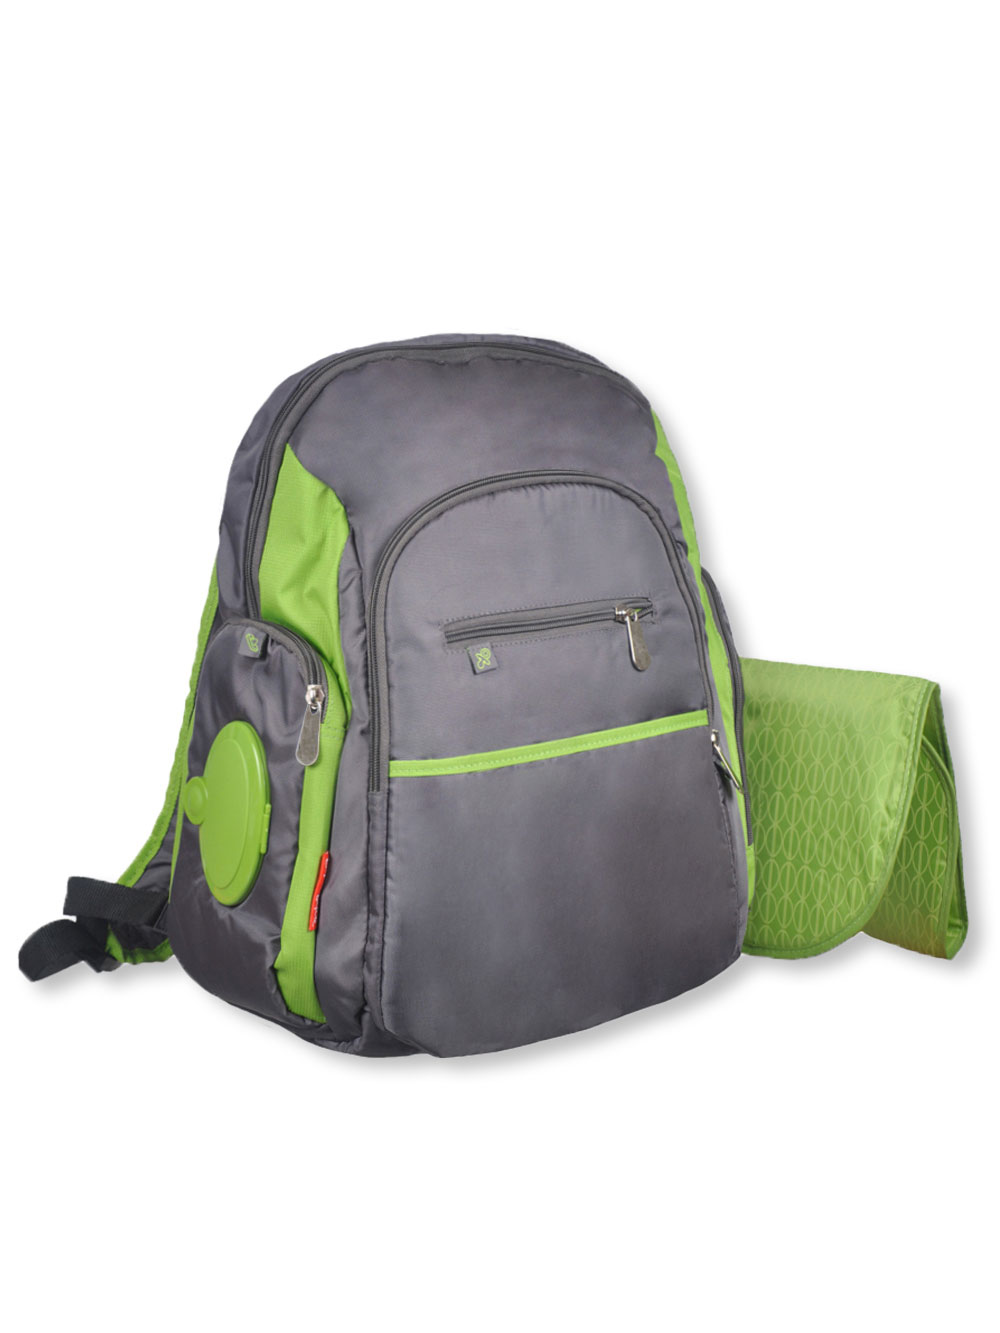 Fisher-Price Diaper Backpack | eBay